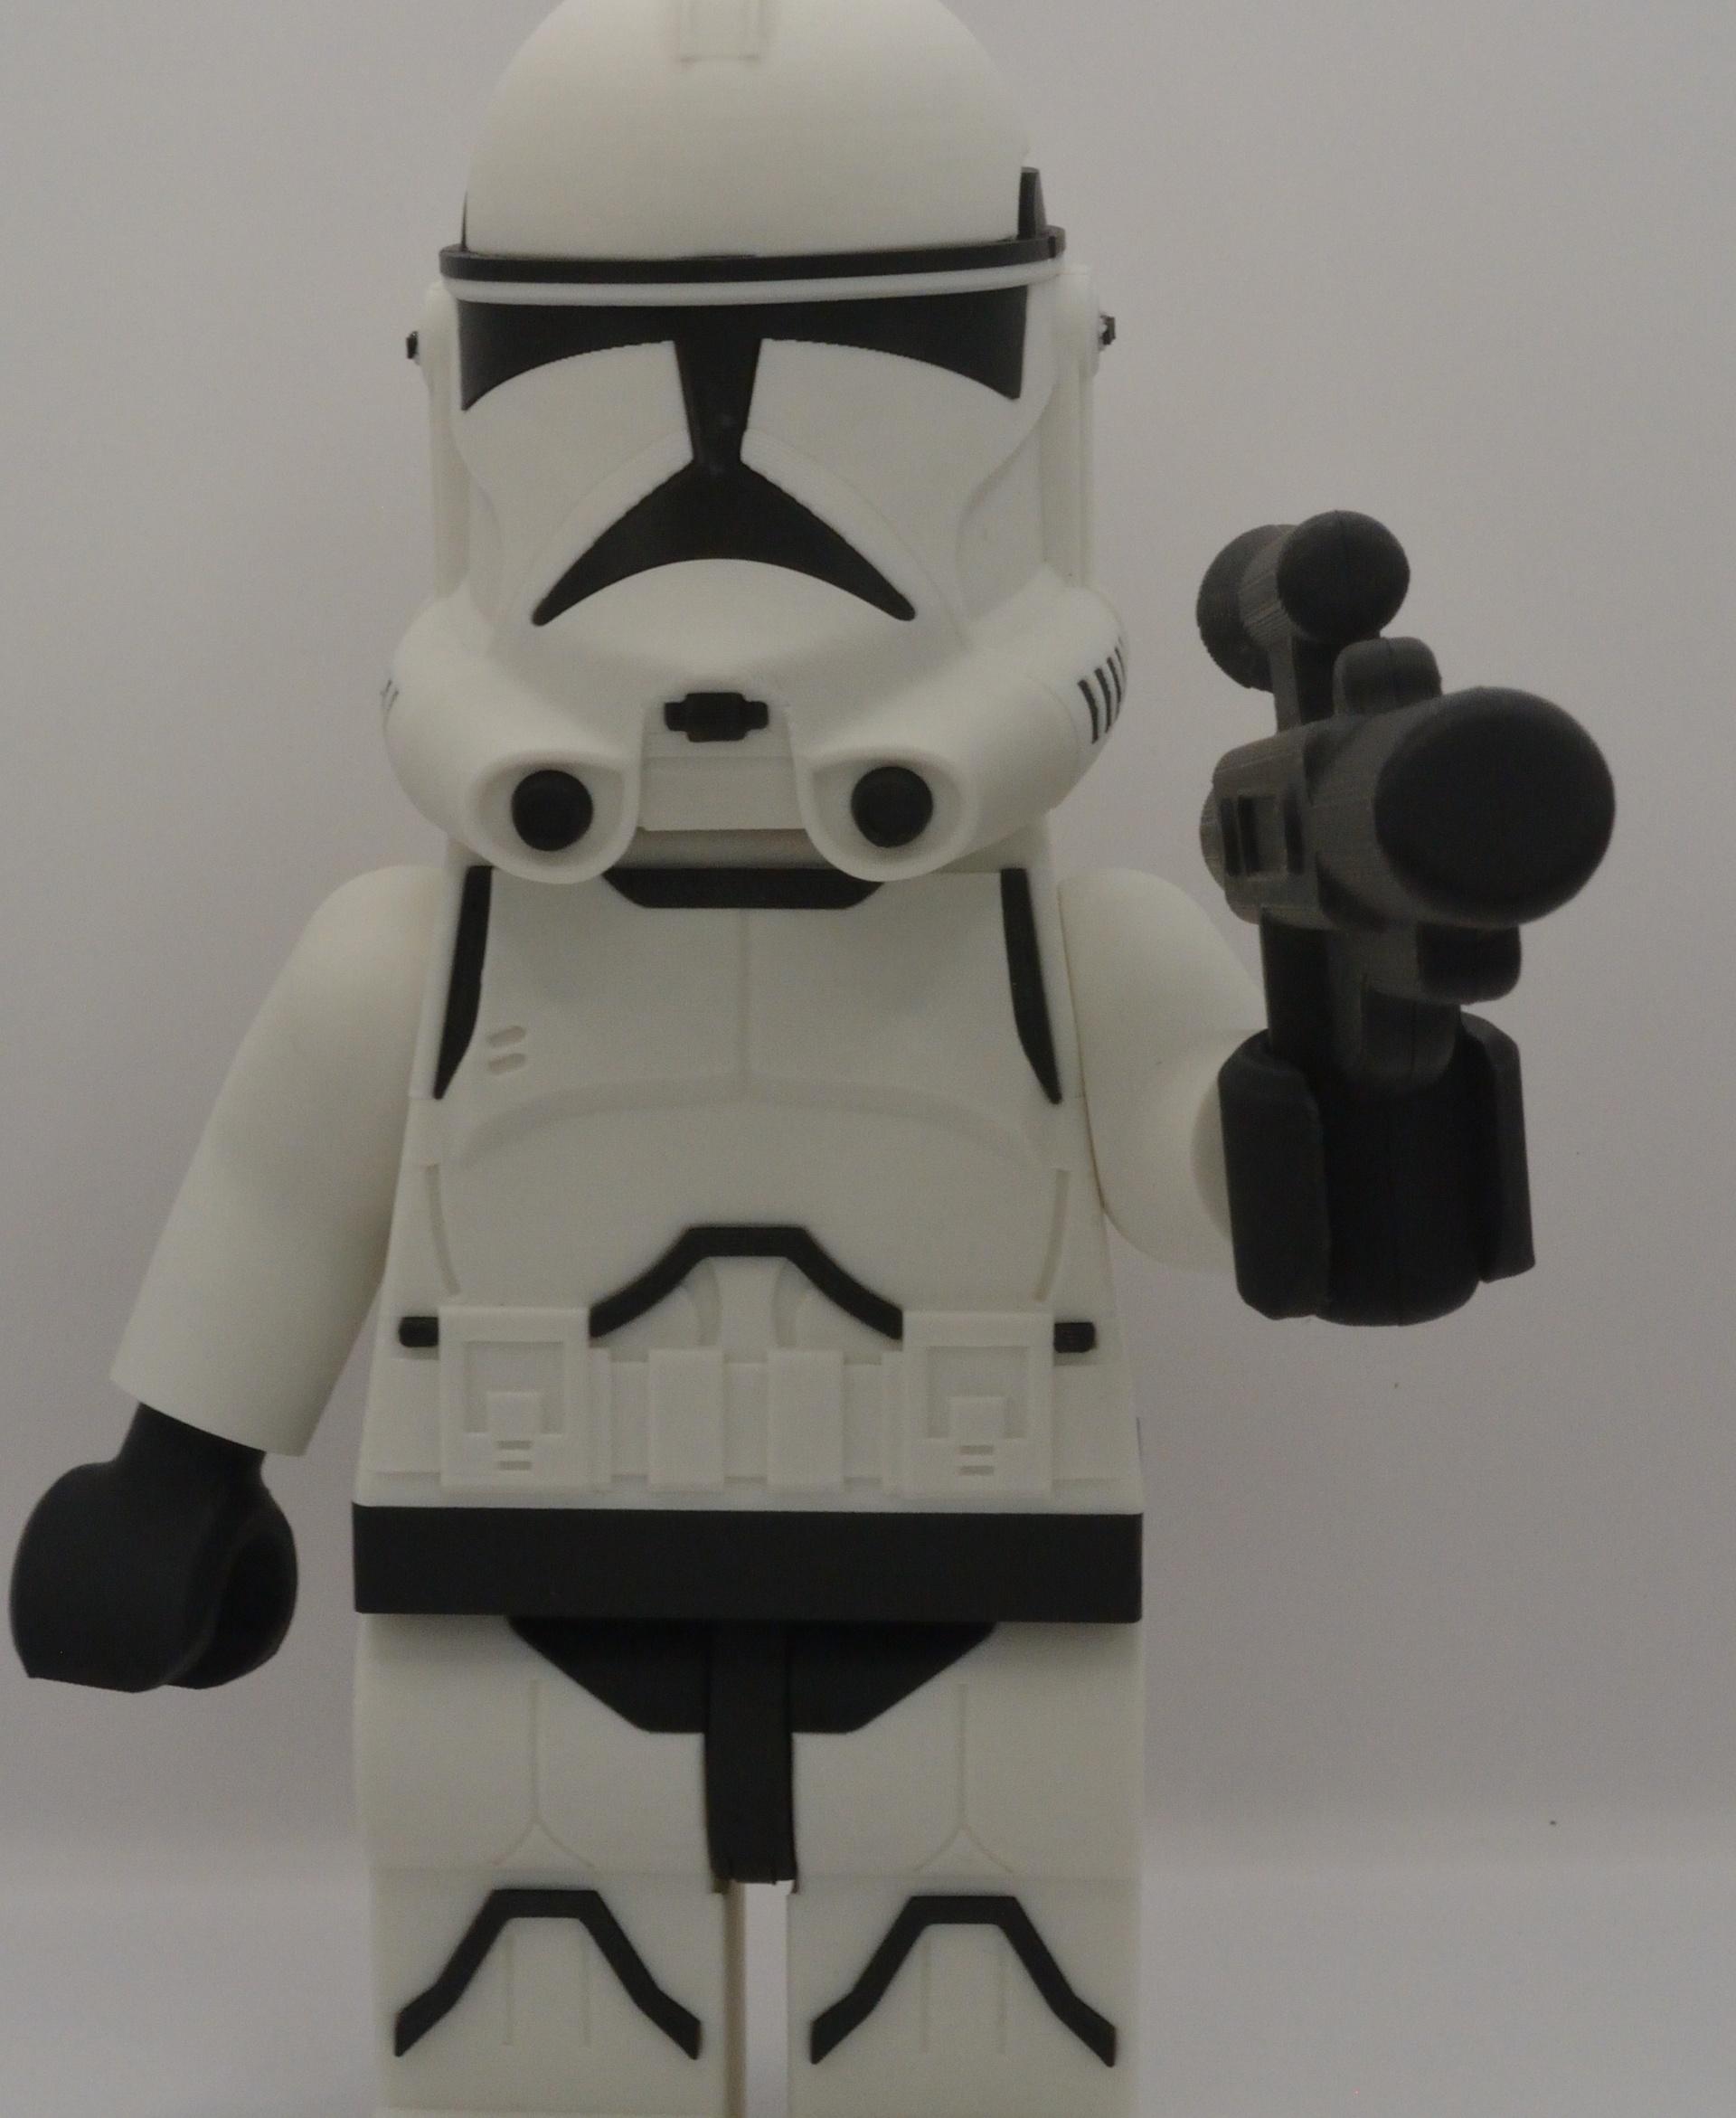 Clone Trooper - Phase II (6:1 LEGO-inspired brick figure, NO MMU/AMS, NO supports, NO glue) 3d model